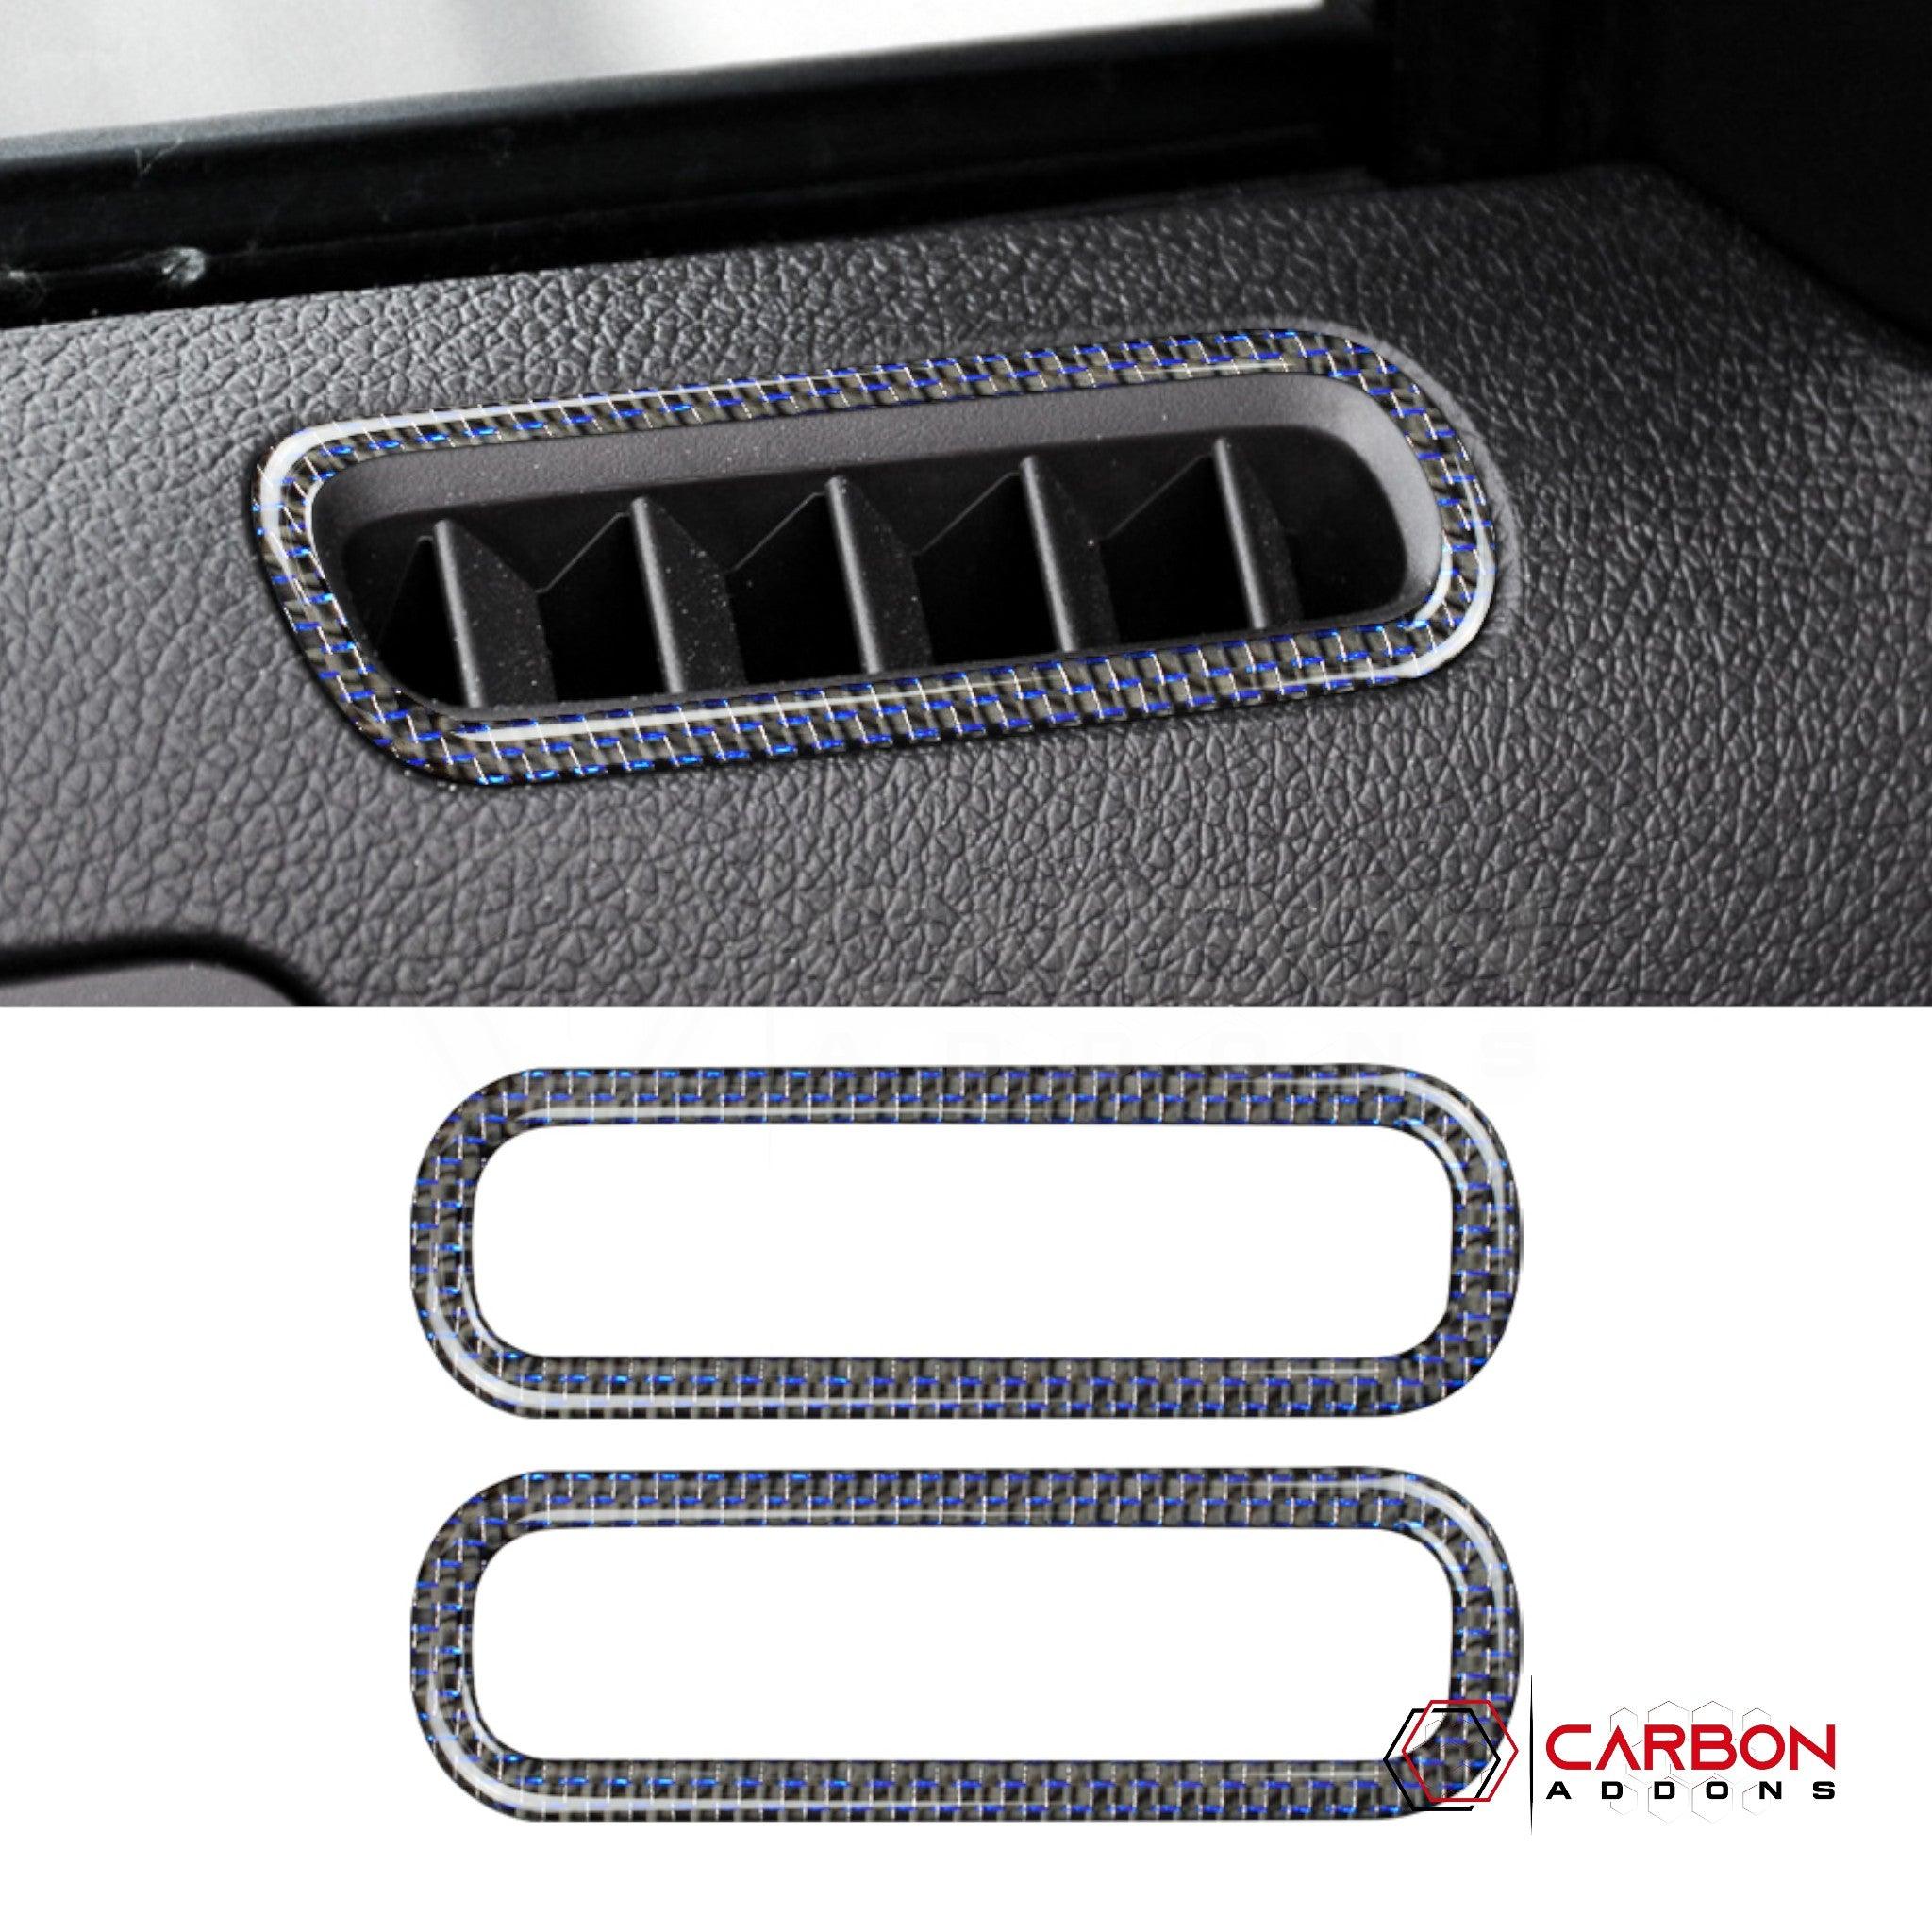 Mustang 2010-2014 Reflective Carbon Fiber Door AC Vent Trim Overlay - carbonaddons Carbon Fiber Parts, Accessories, Upgrades, Mods